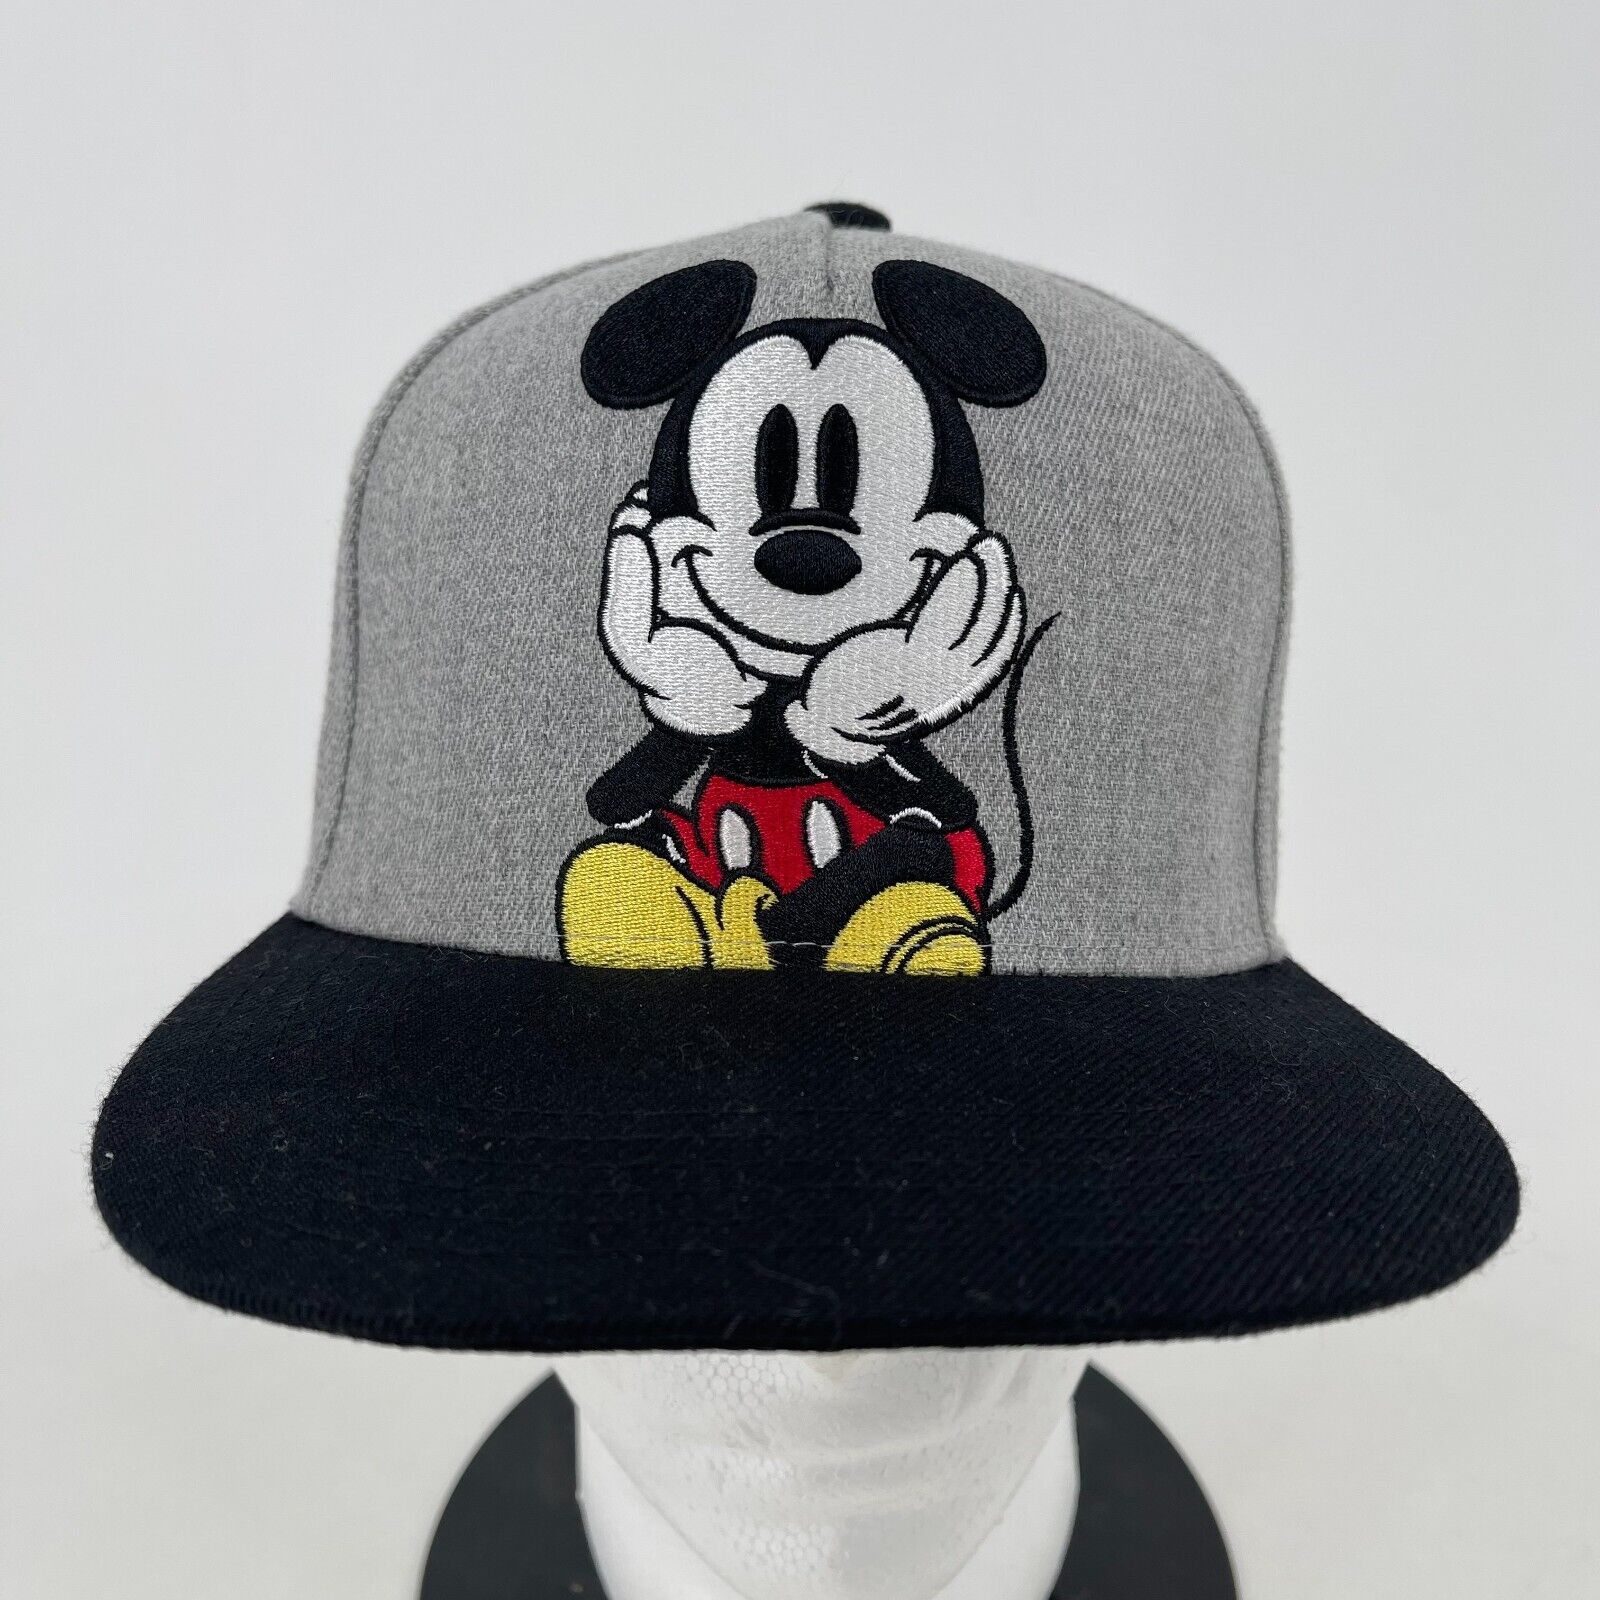 Disneyland Disney World Mickey Mouse Black Gray Adjustable Snapback Hat Cap